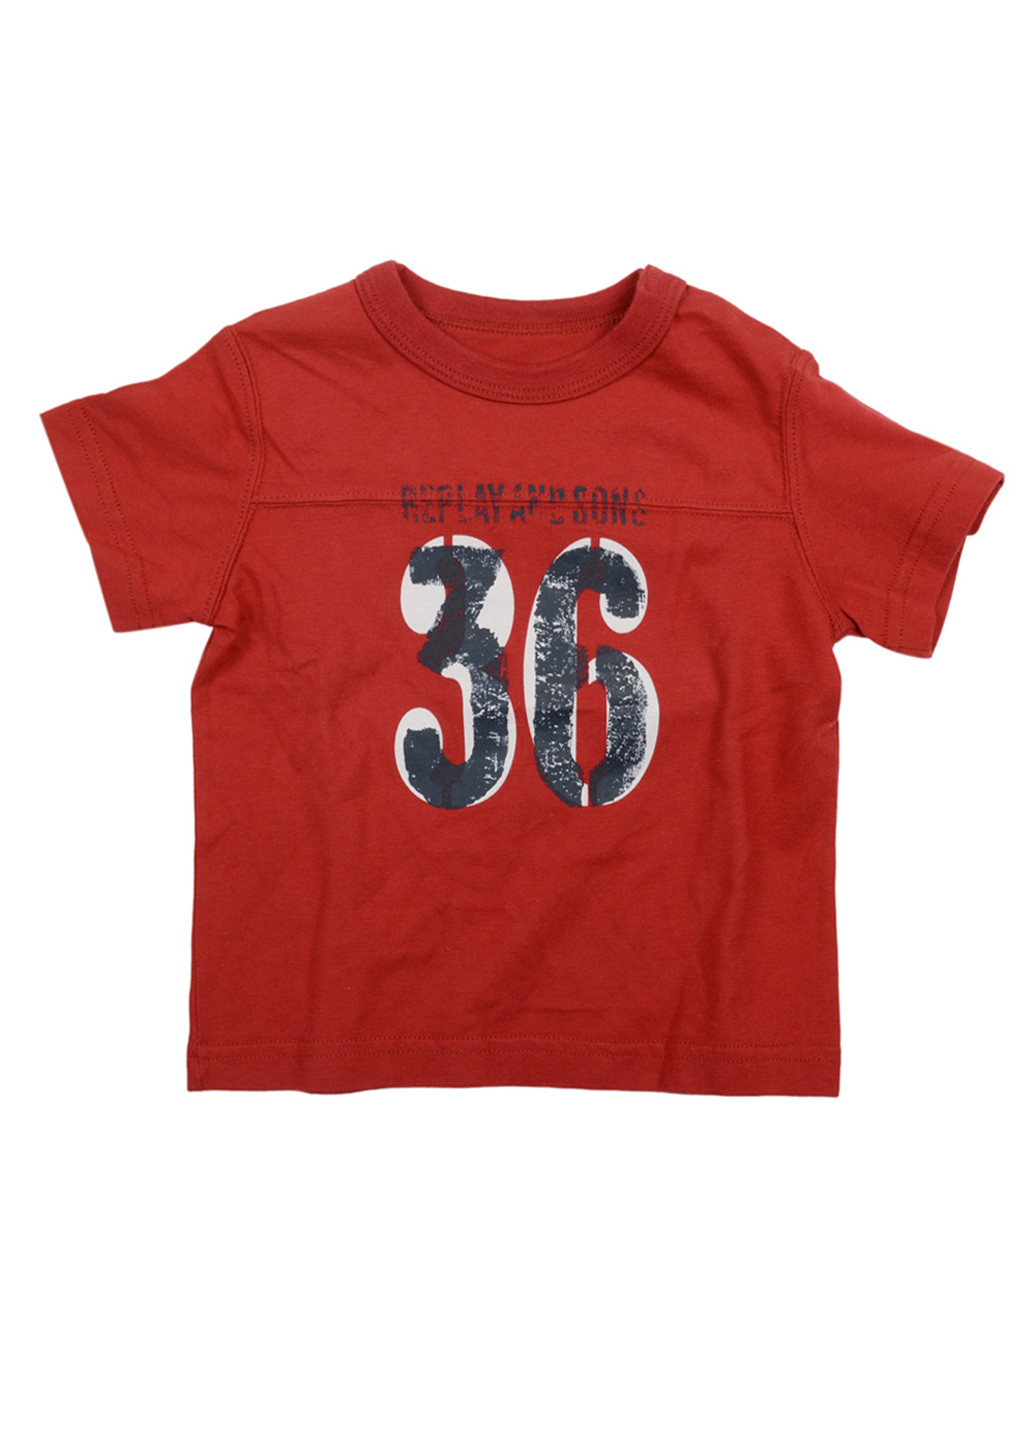 Красная летняя футболка с коротким рукавом Replay & Sons